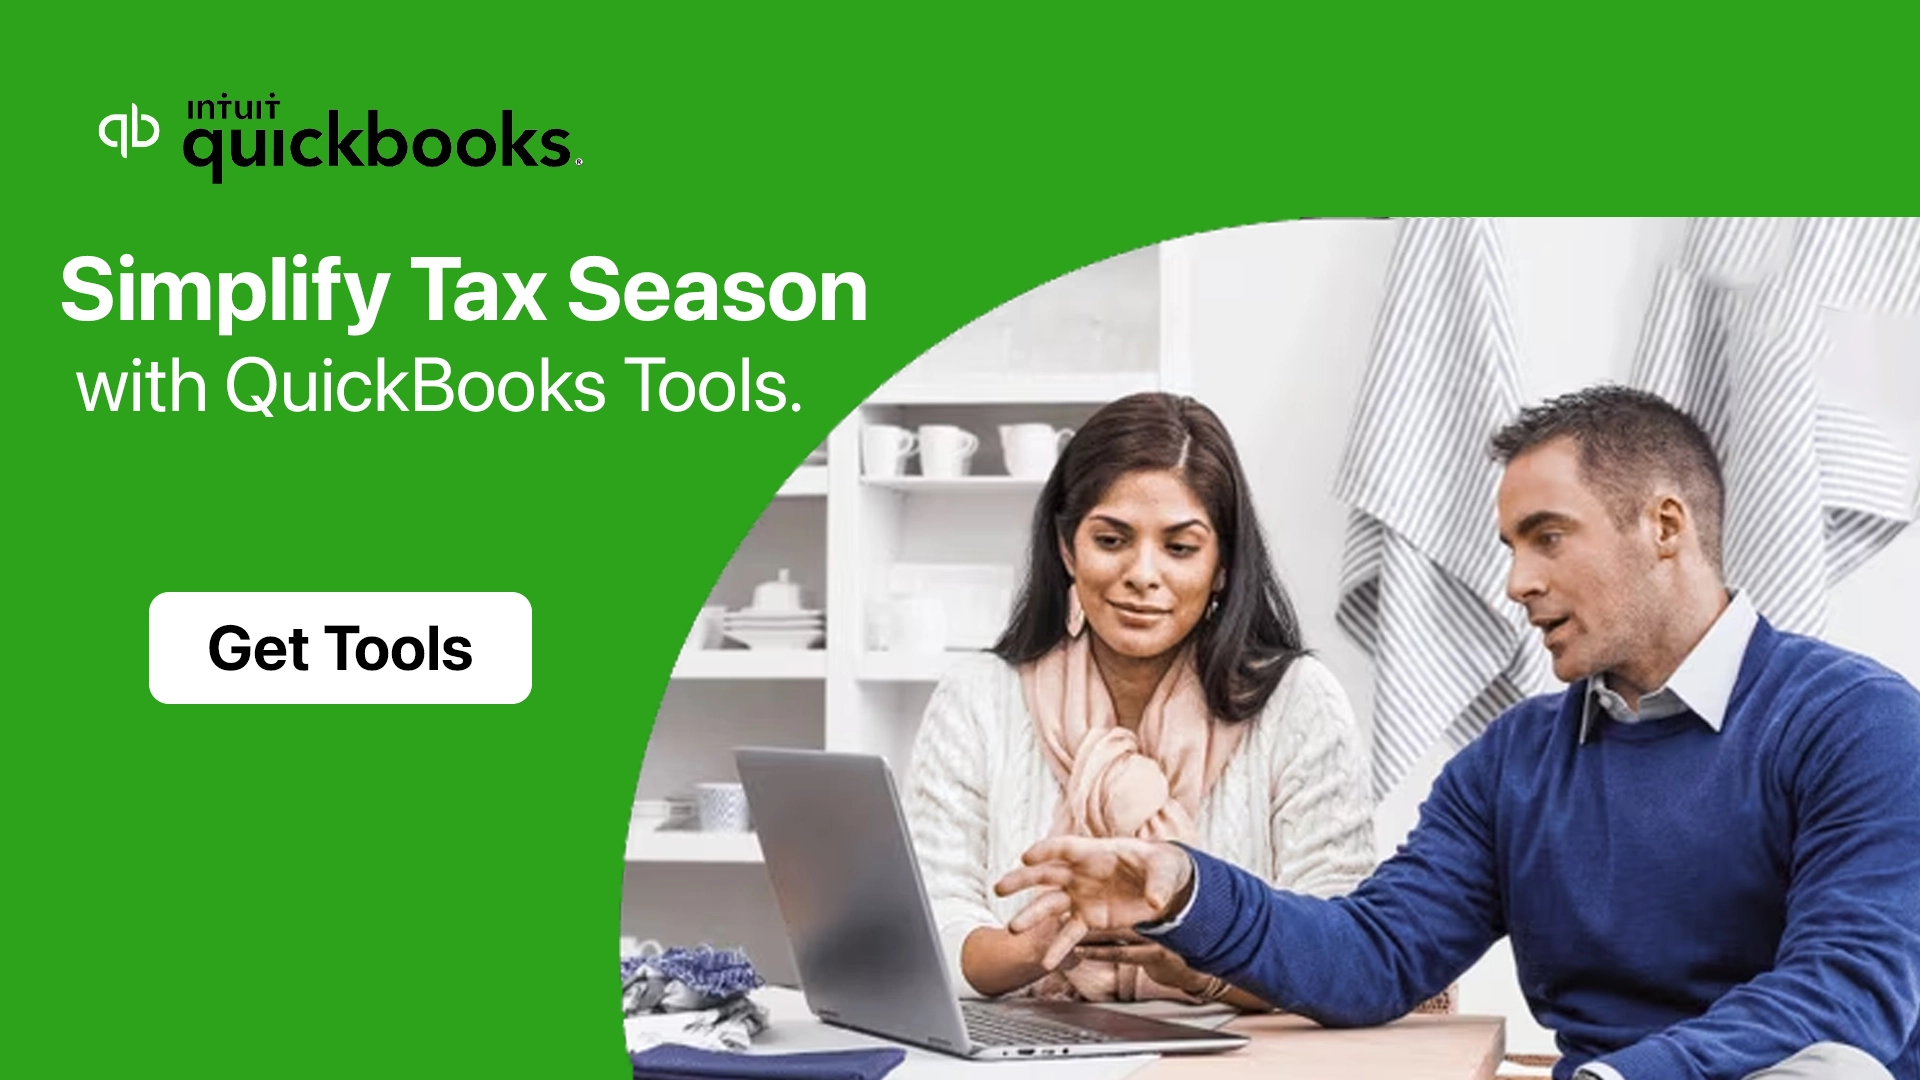 uickBooks tools for small business tax season